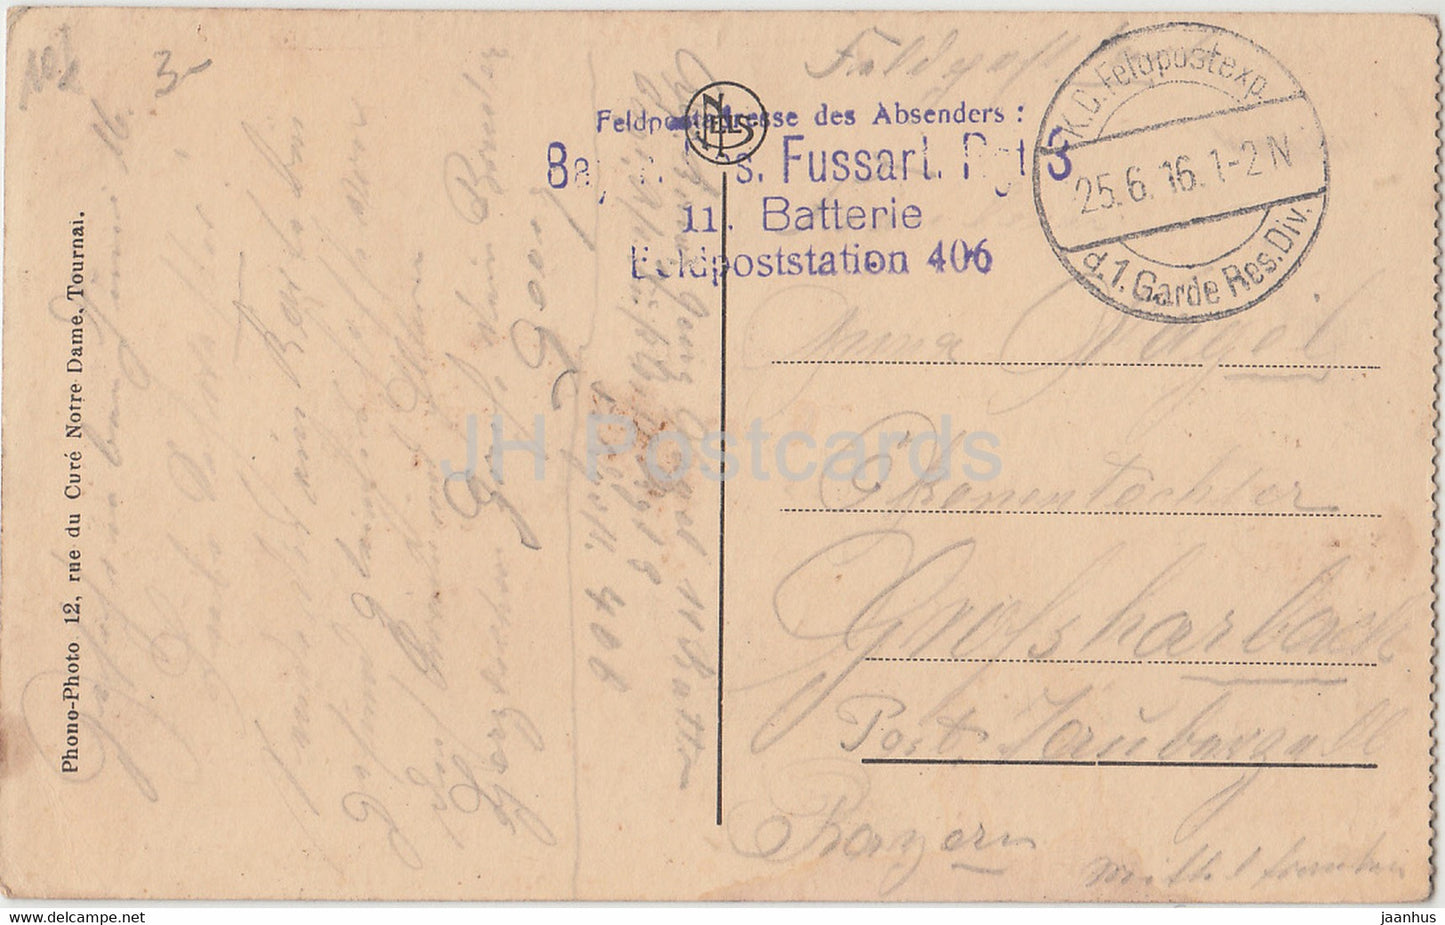 Douai - Hotel de Ville  - Salle Gothique - Bayr. Res.-Fussart.-Rgt. Feldpost - old postcard - 1916 - France - used